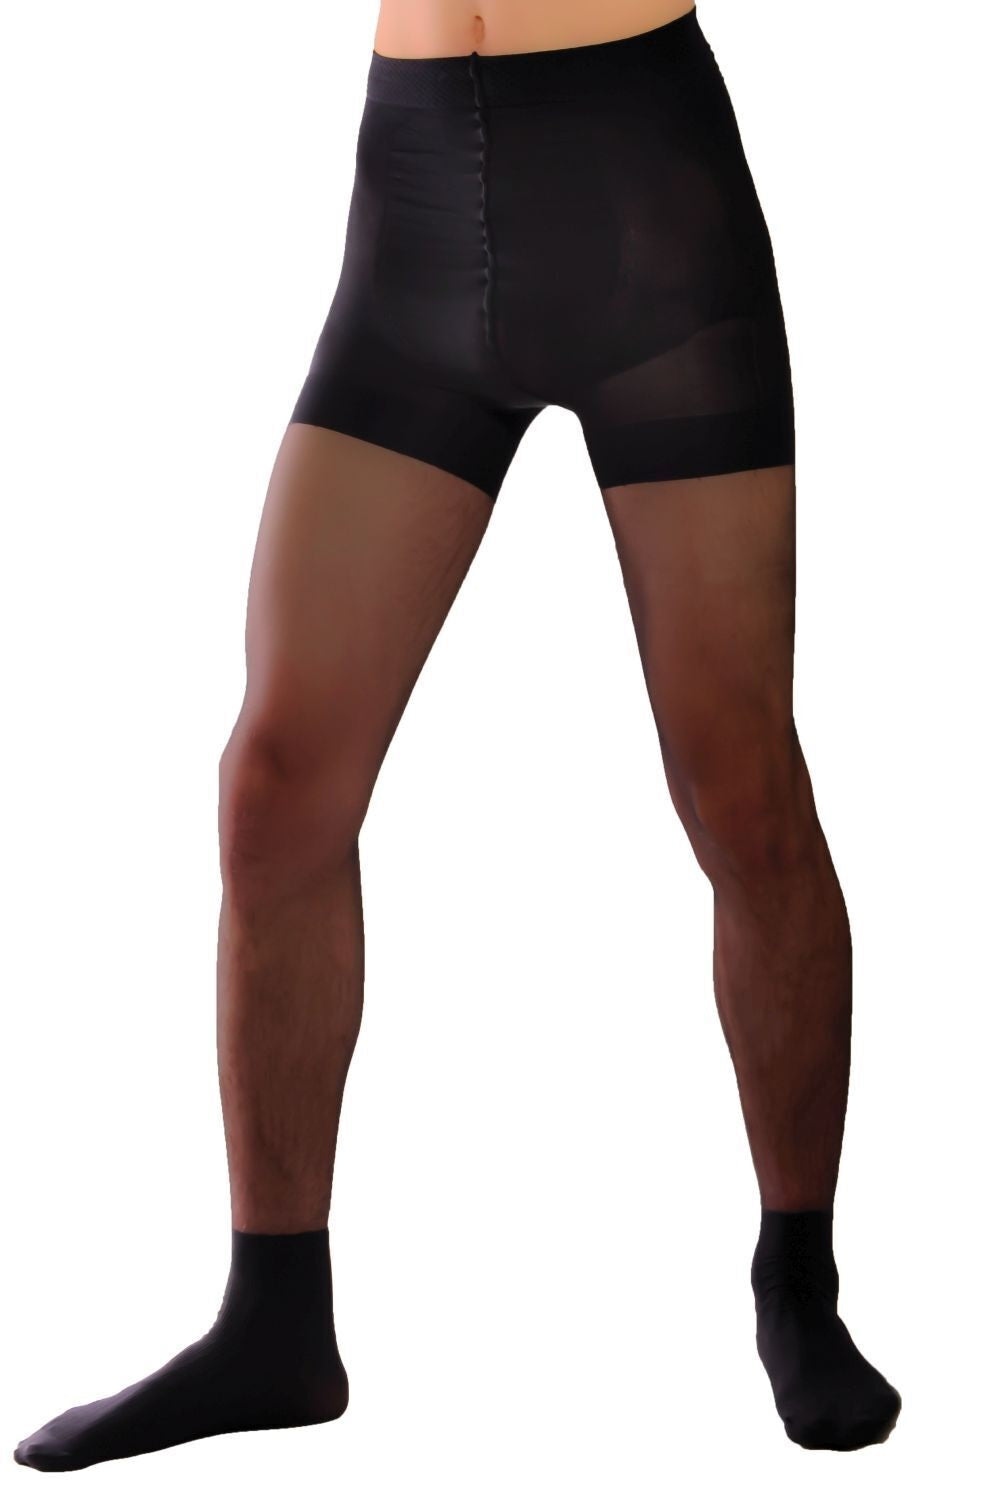 Men's tights 20 DEN black – smart &amp; comfortable 